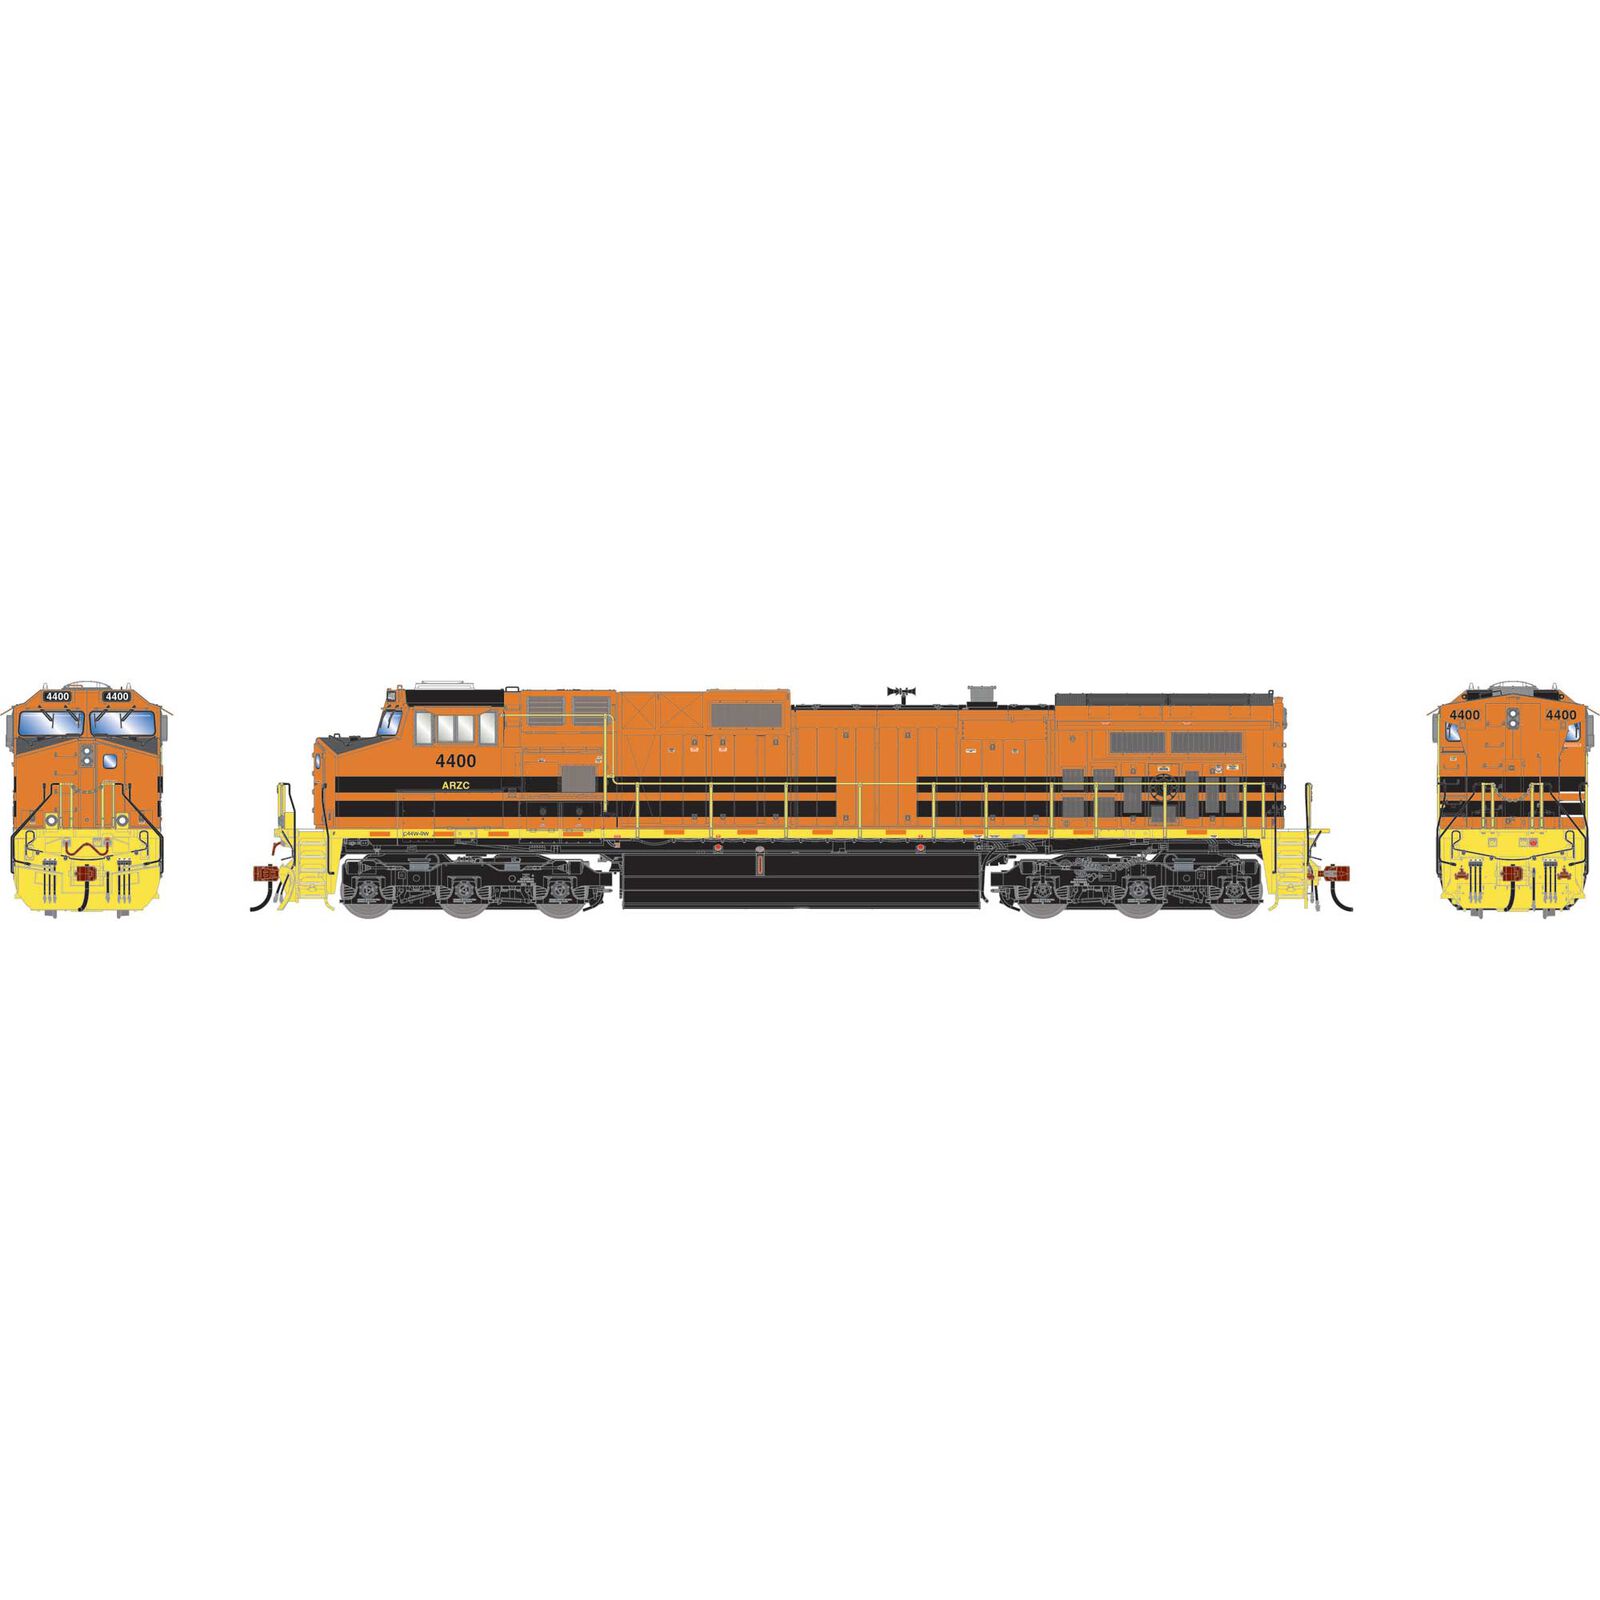 HO GE Dash 9-44CW Locomotive, ARZC #4400